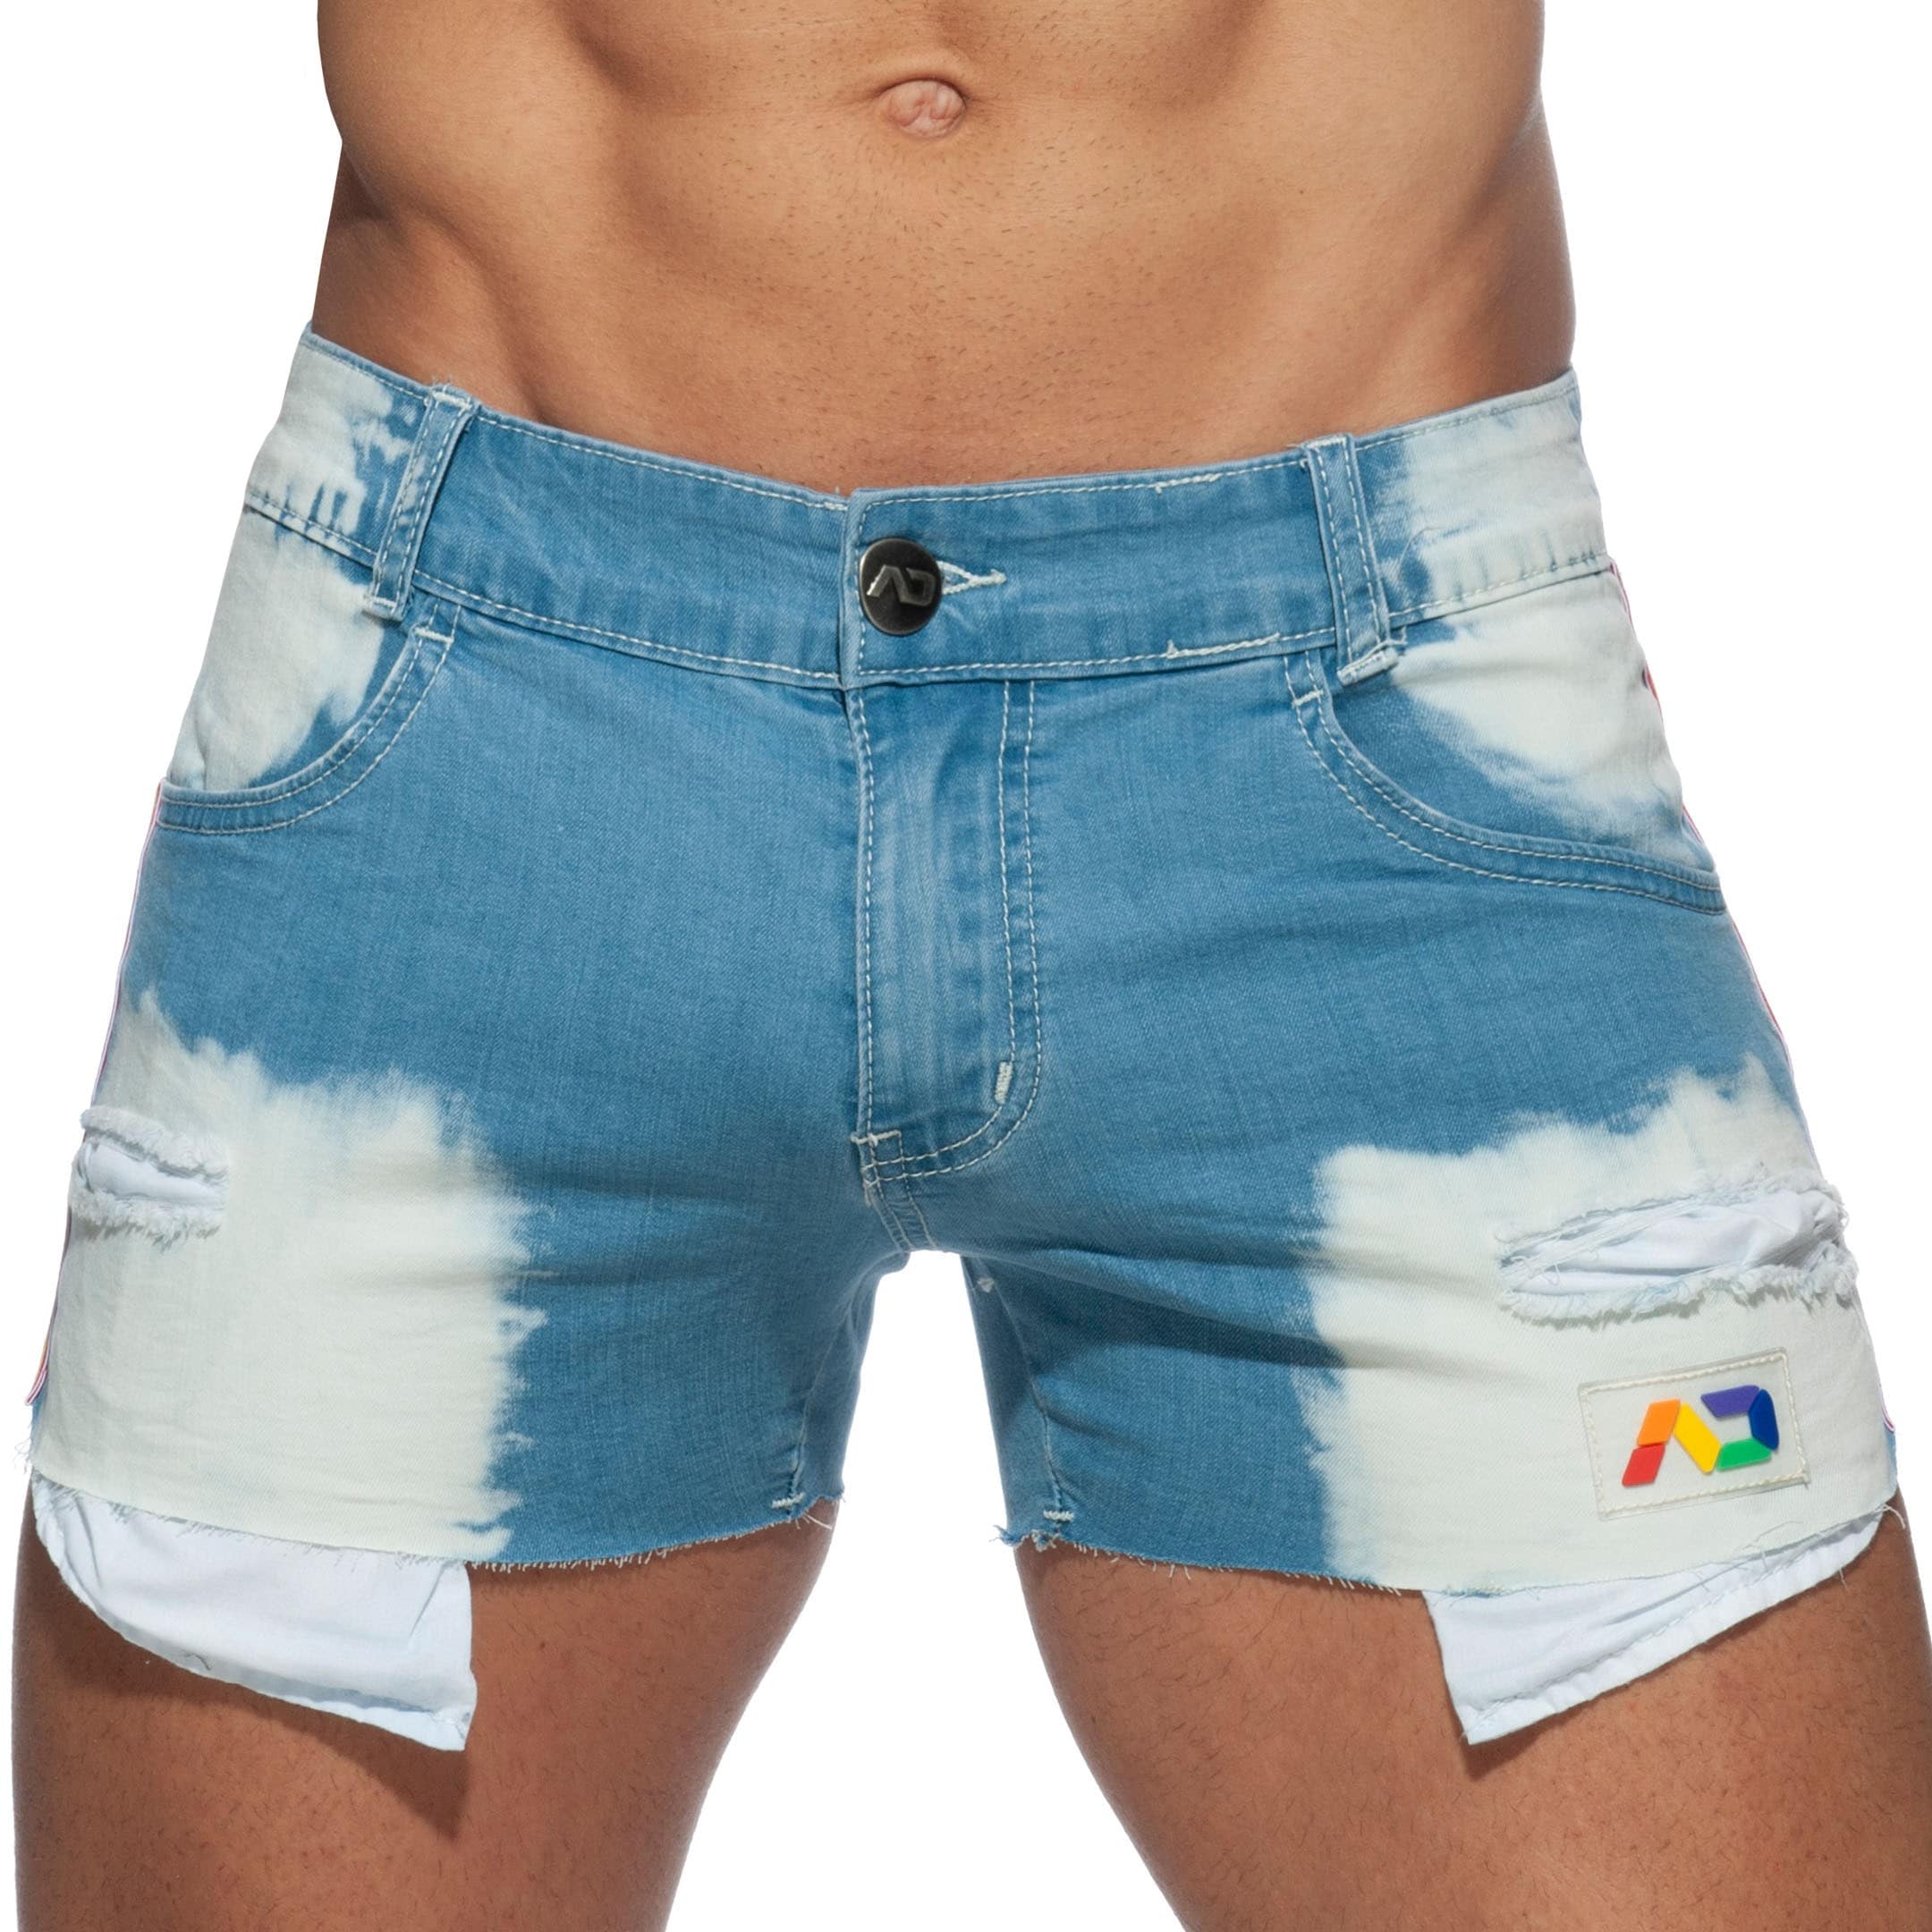 Addicted Pride Jeans Shorts - Indigo Blue